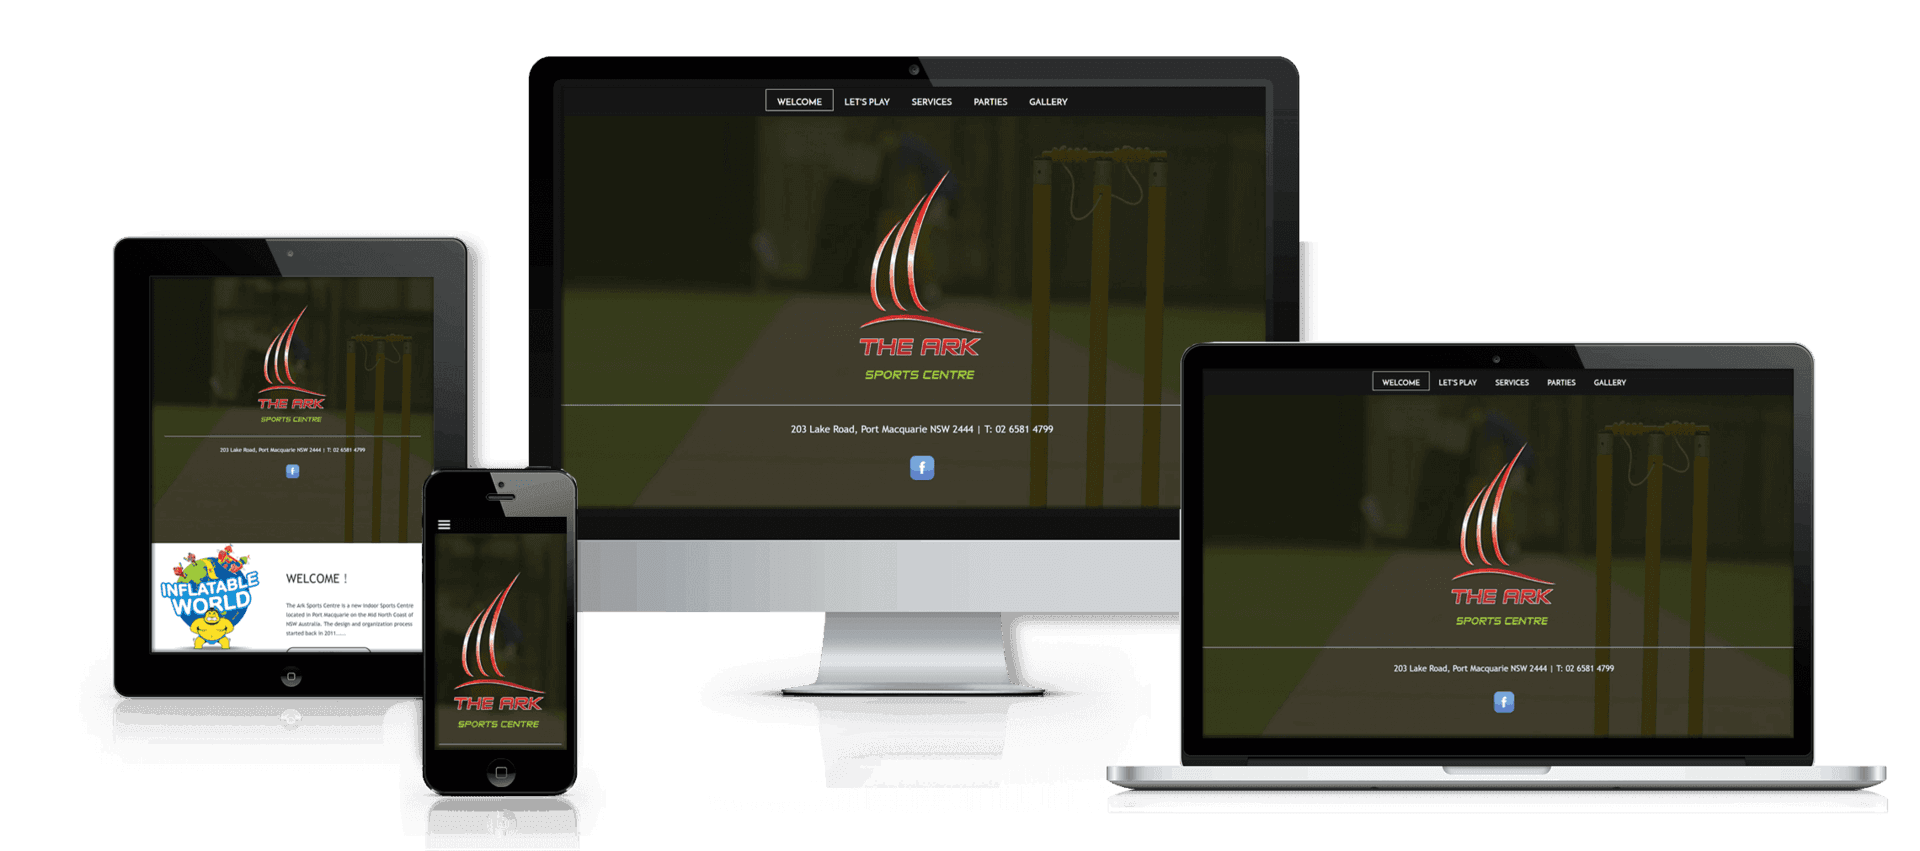 Edgezone Media client Ark Sports Centre website image.